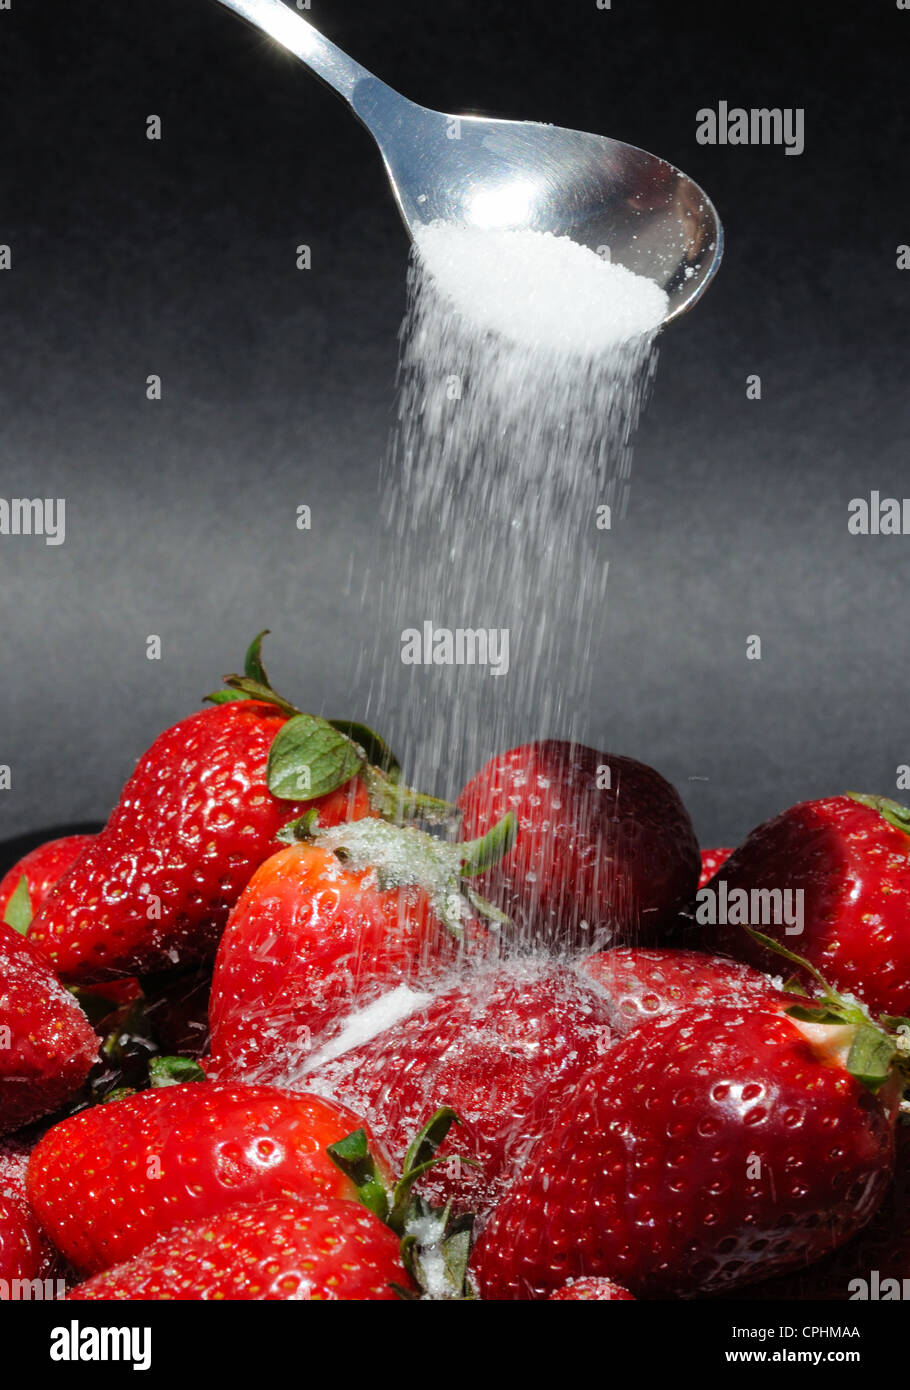 Sprinkling granulated sugar onto whole fresh strawberries. Stock Photo